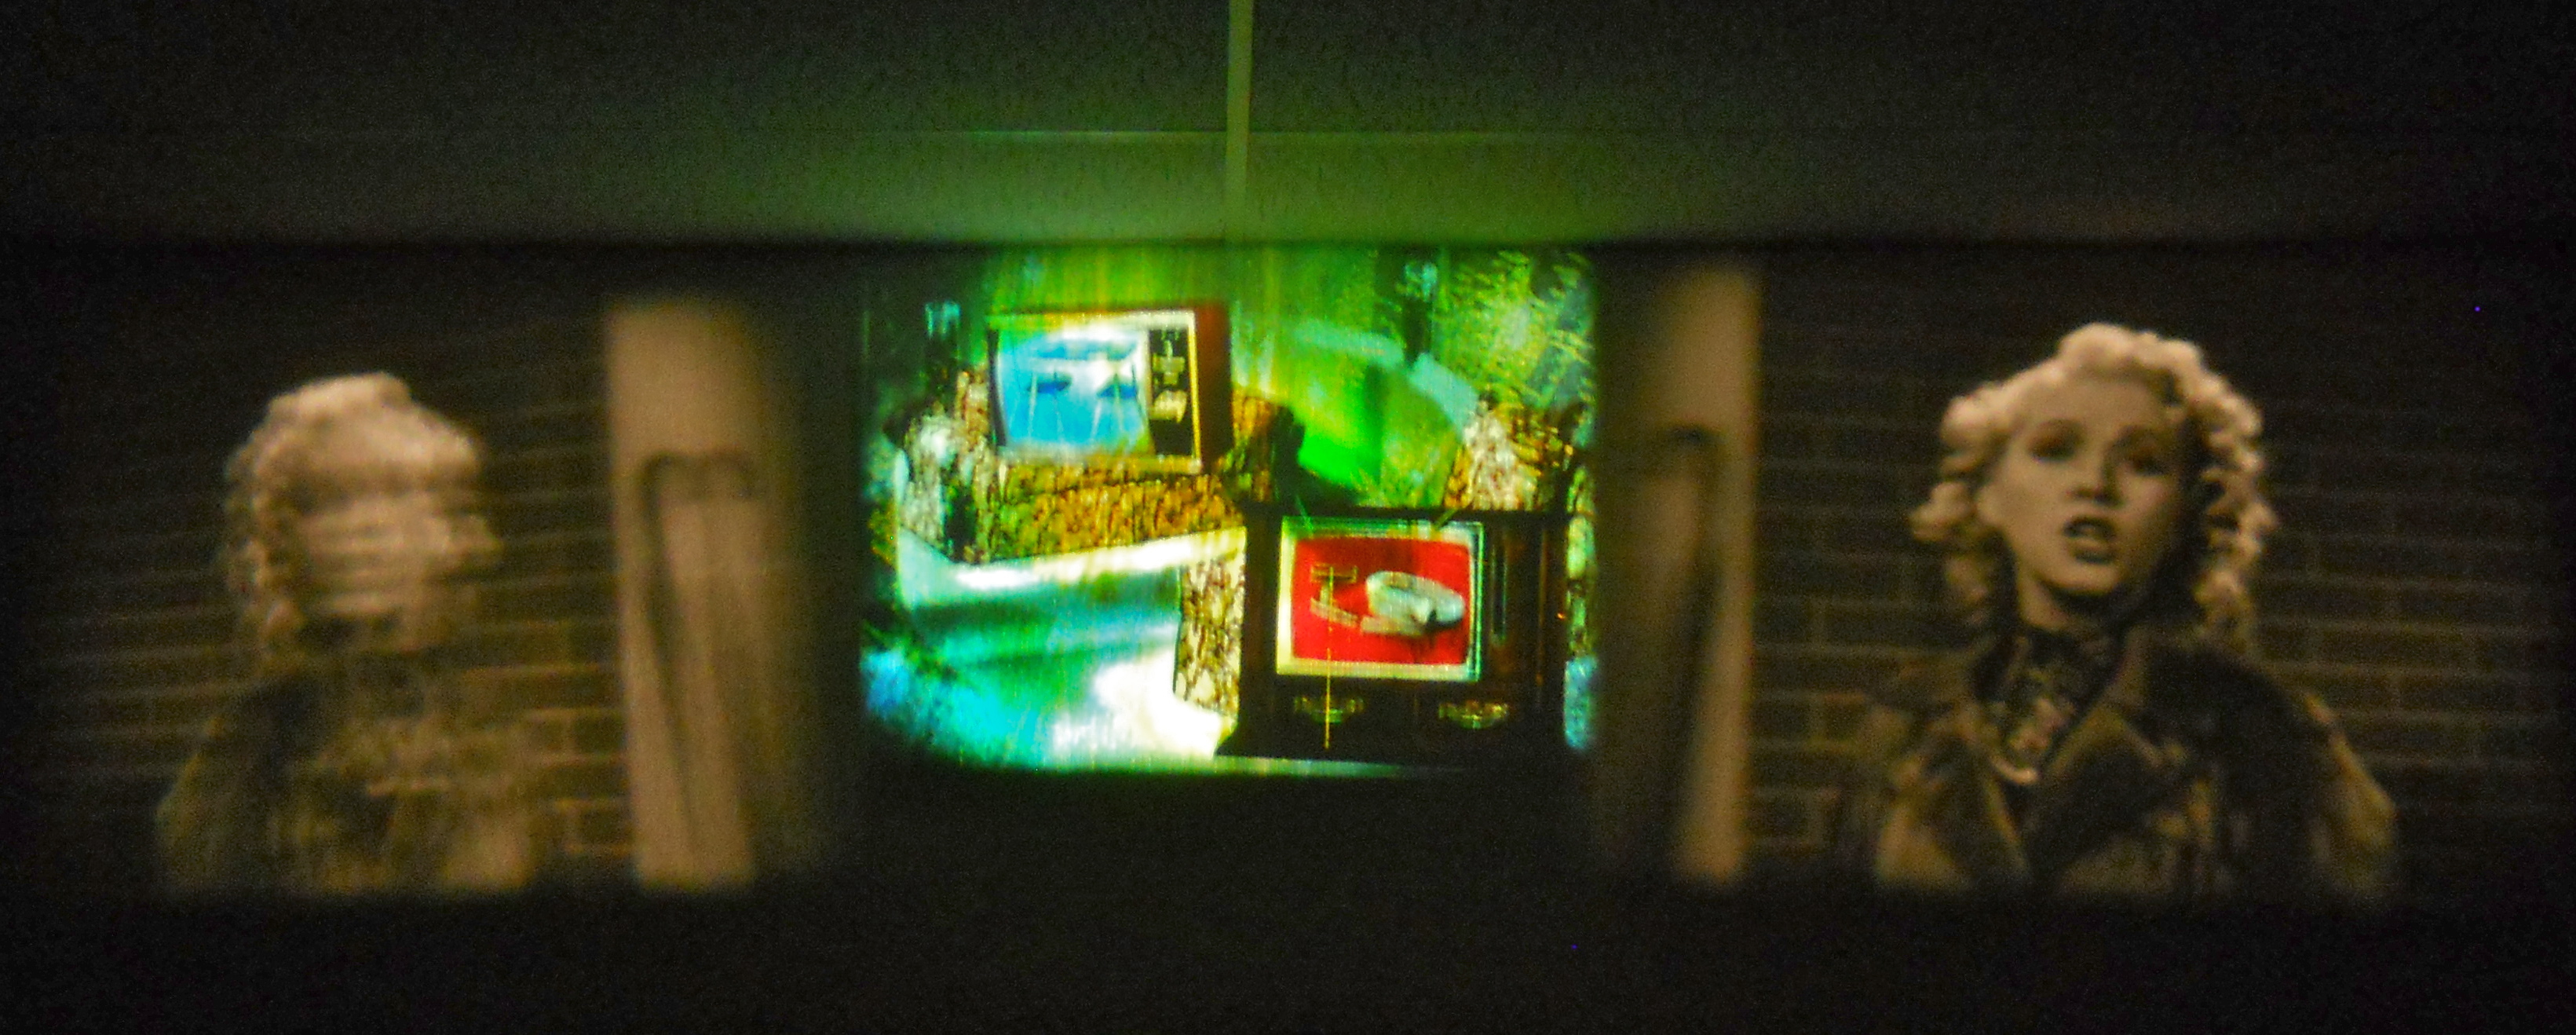 February 2014 @ The Projection Museum, Portland Oregon